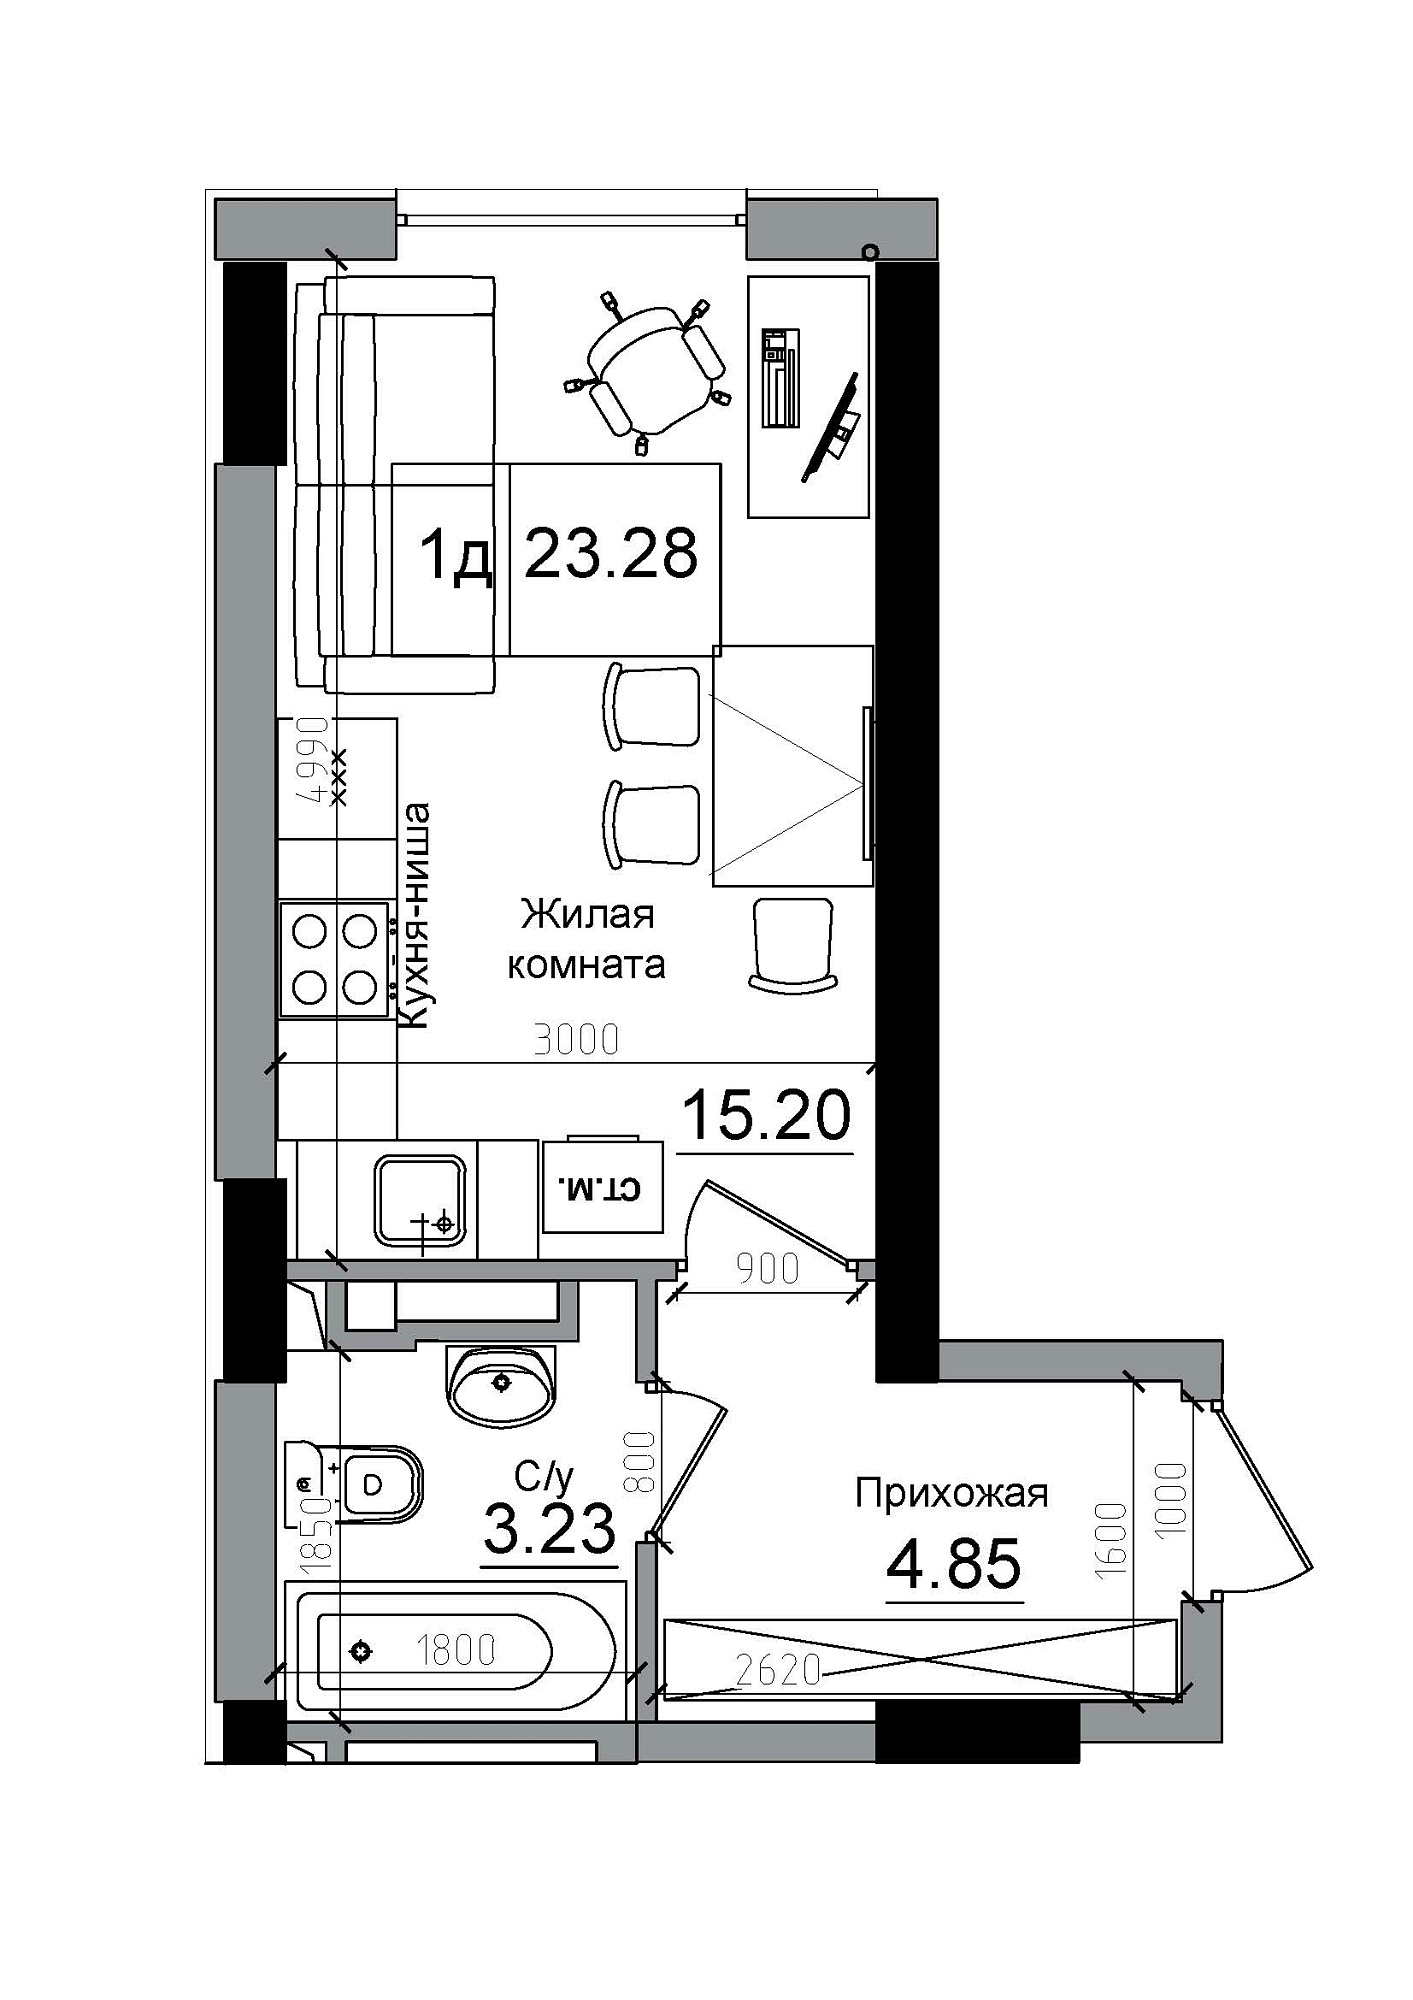 Planning Smart flats area 23.28m2, AB-12-10/00005.